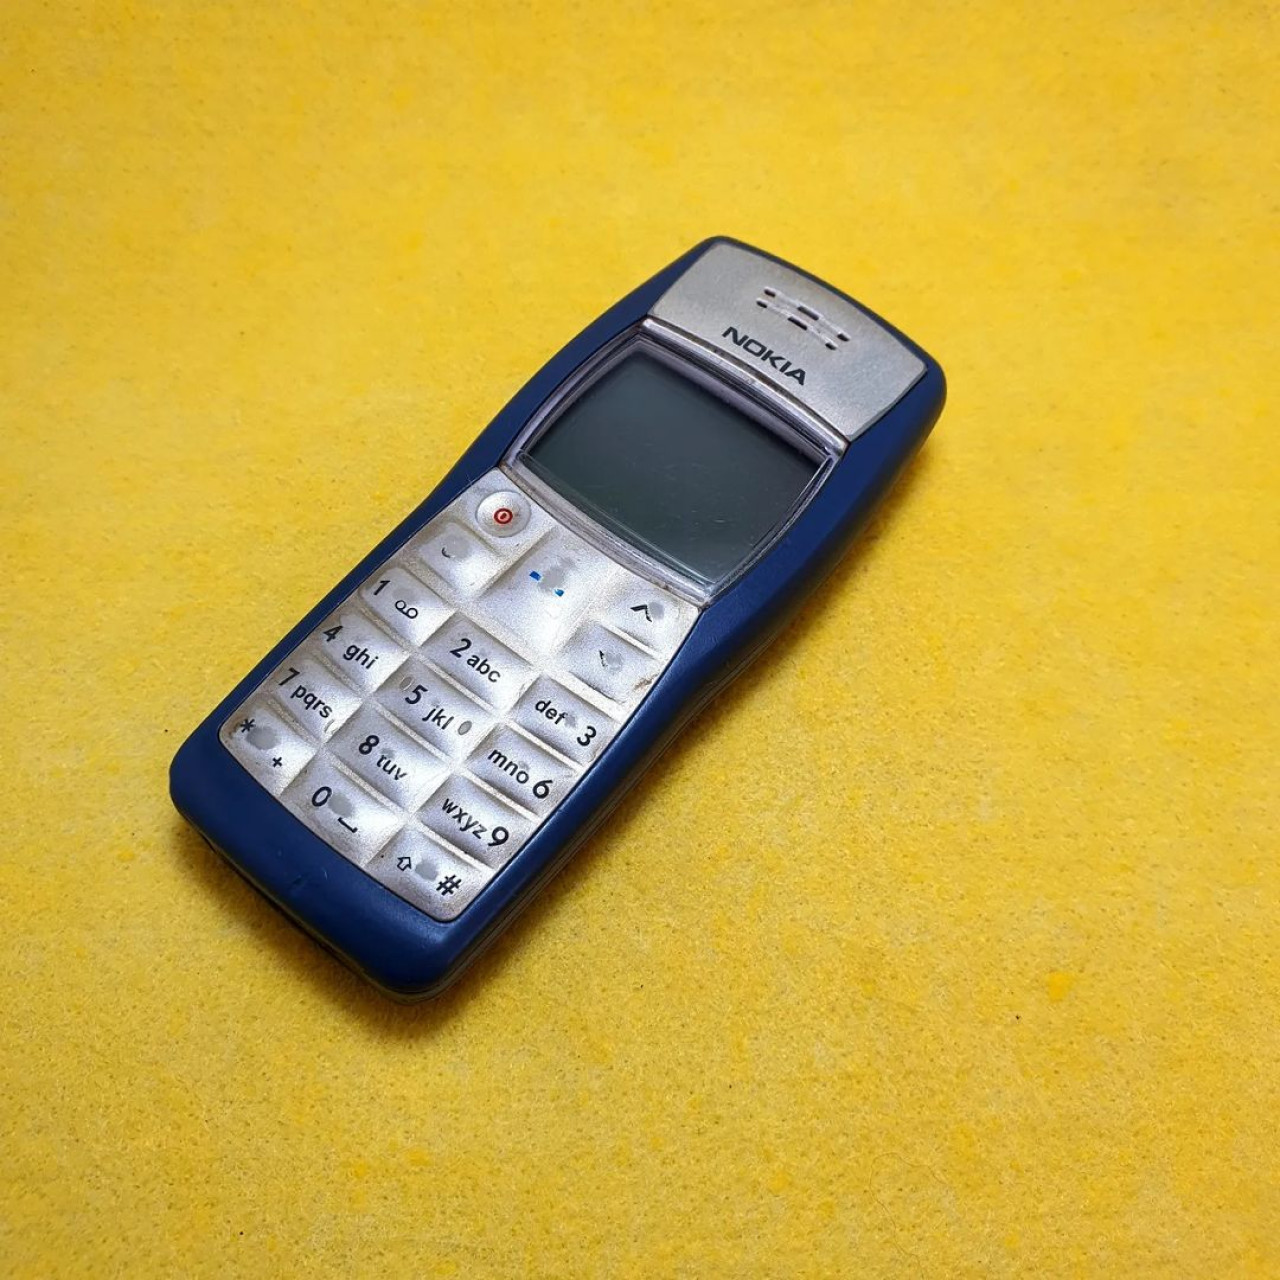 Nokia 1100. Foto: Instagram.